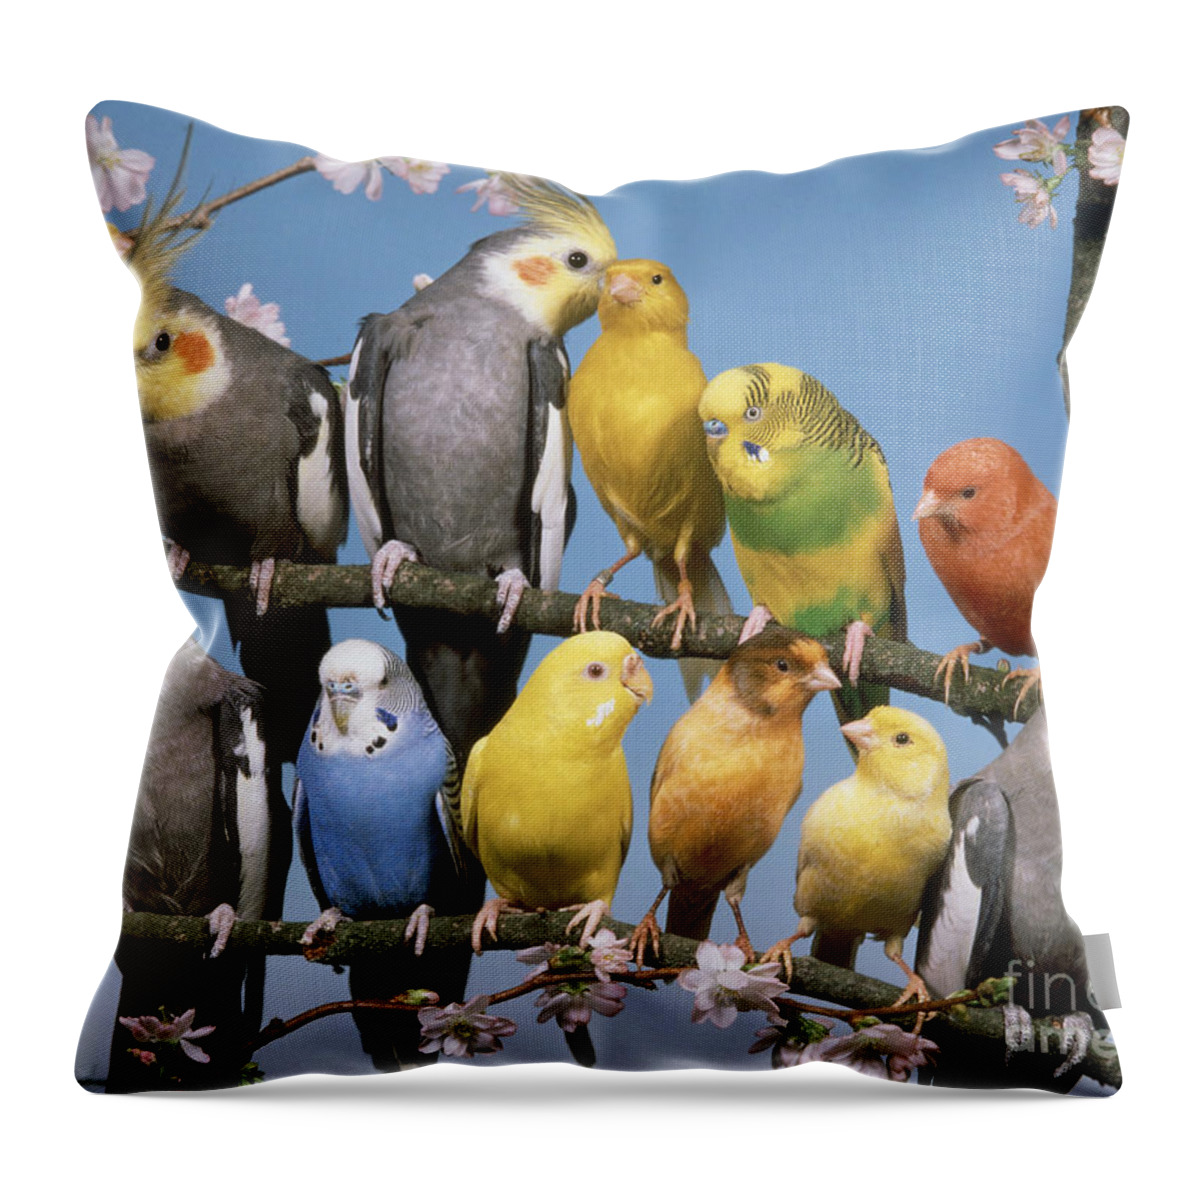 Animal Throw Pillow featuring the photograph Twelve Birds by Hans Reinhard